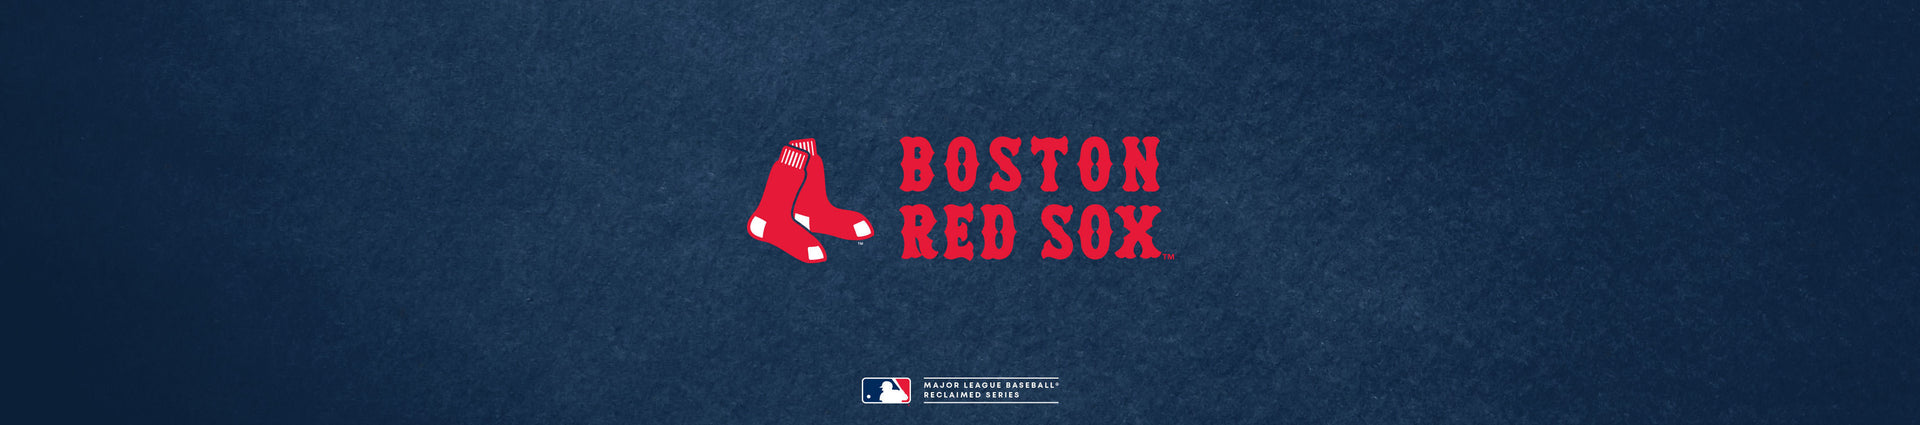 Kollektion der Boston Red Sox™